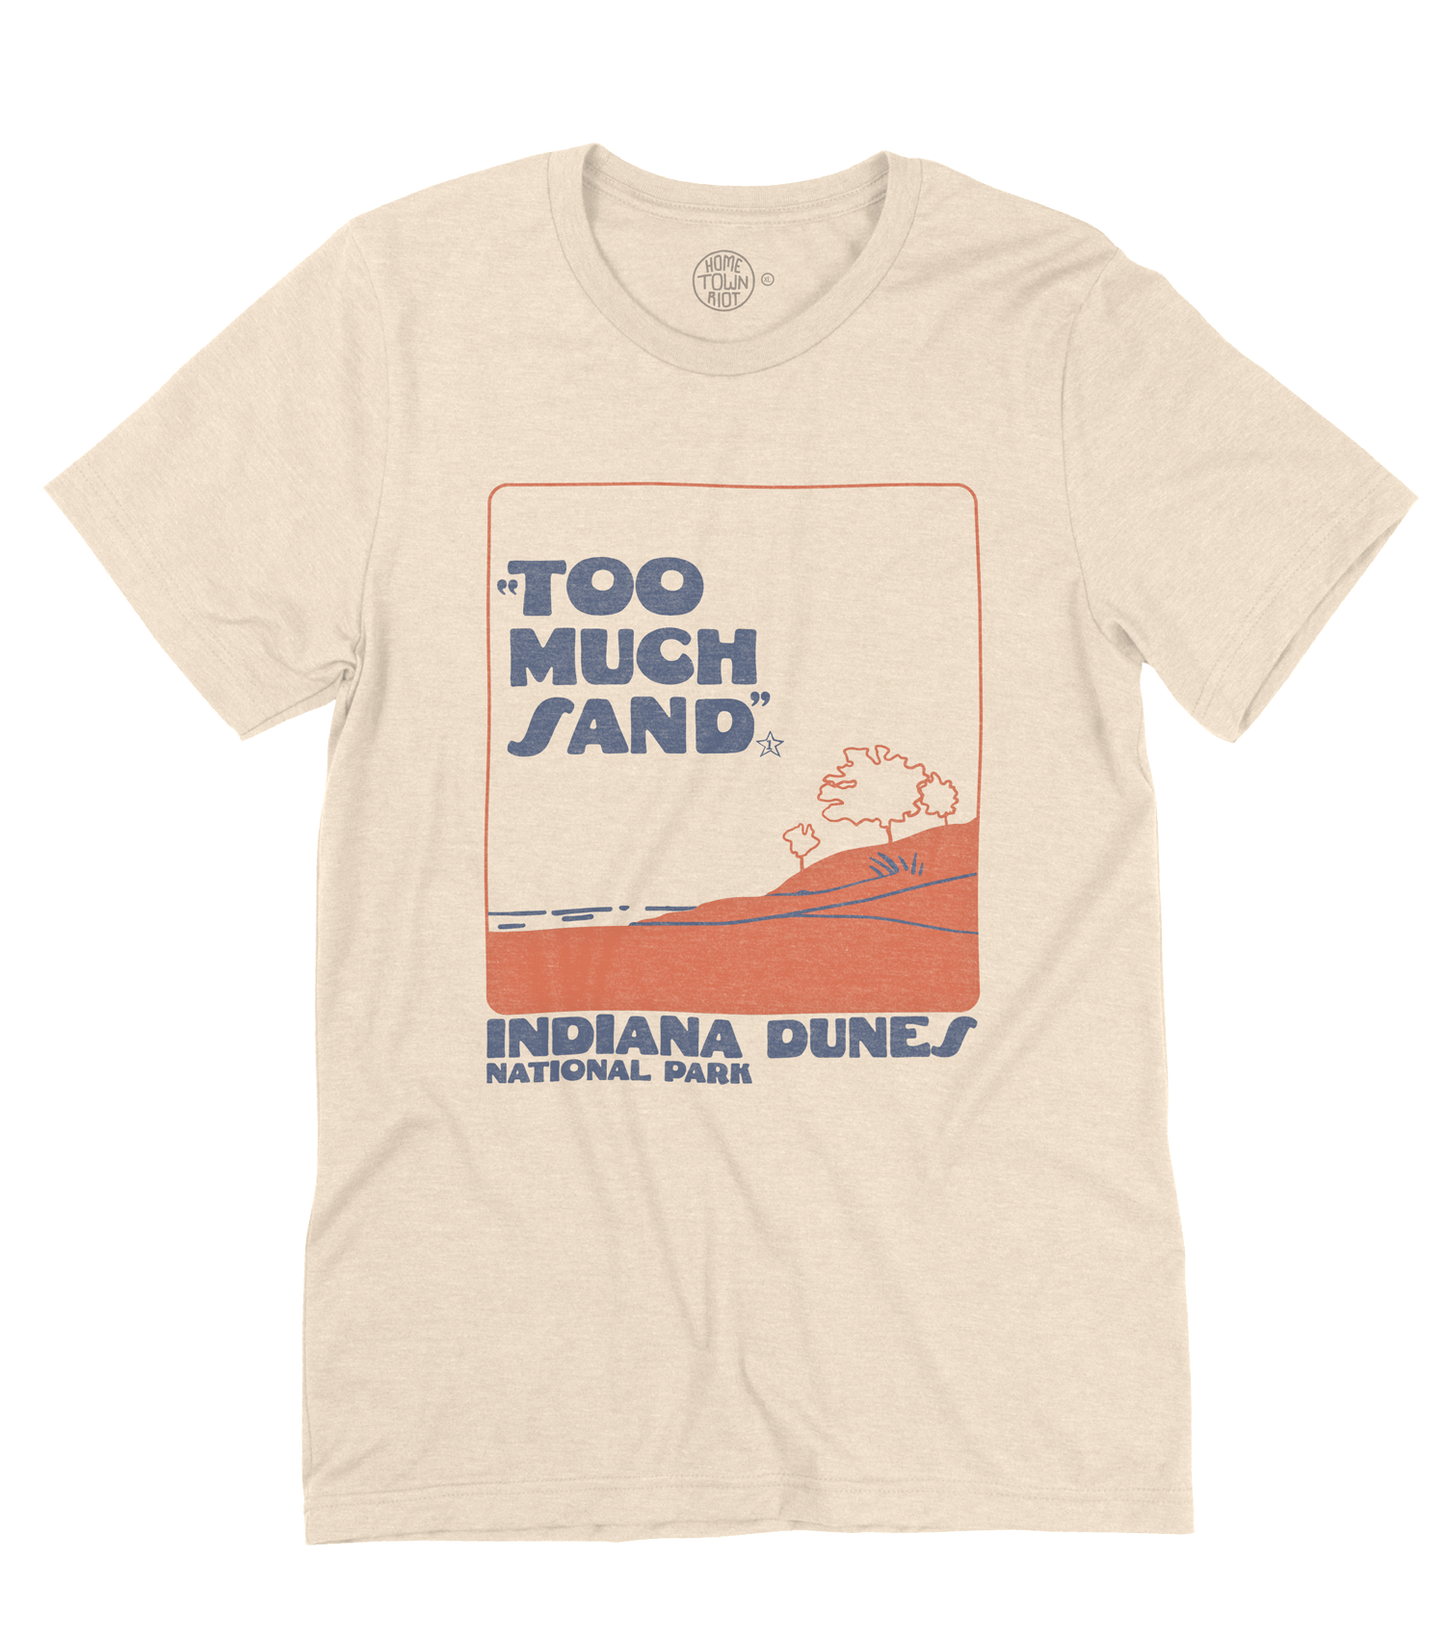 Indiana Dunes National Park 1 Star Review Shirt